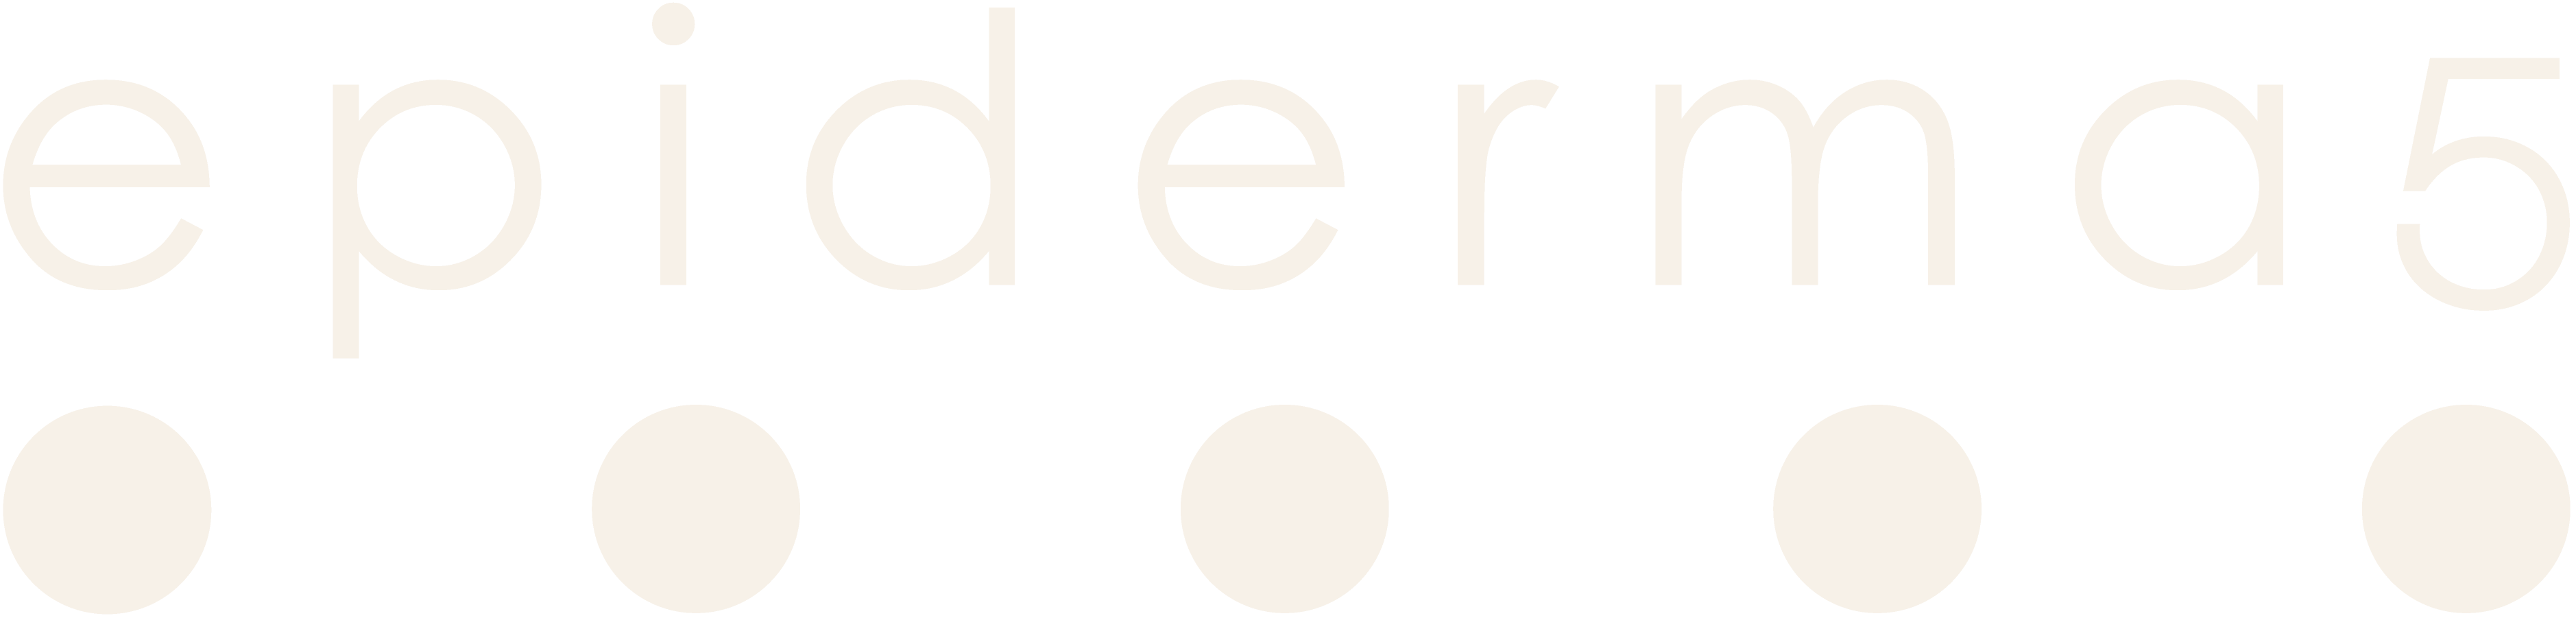 epiderma5-logo